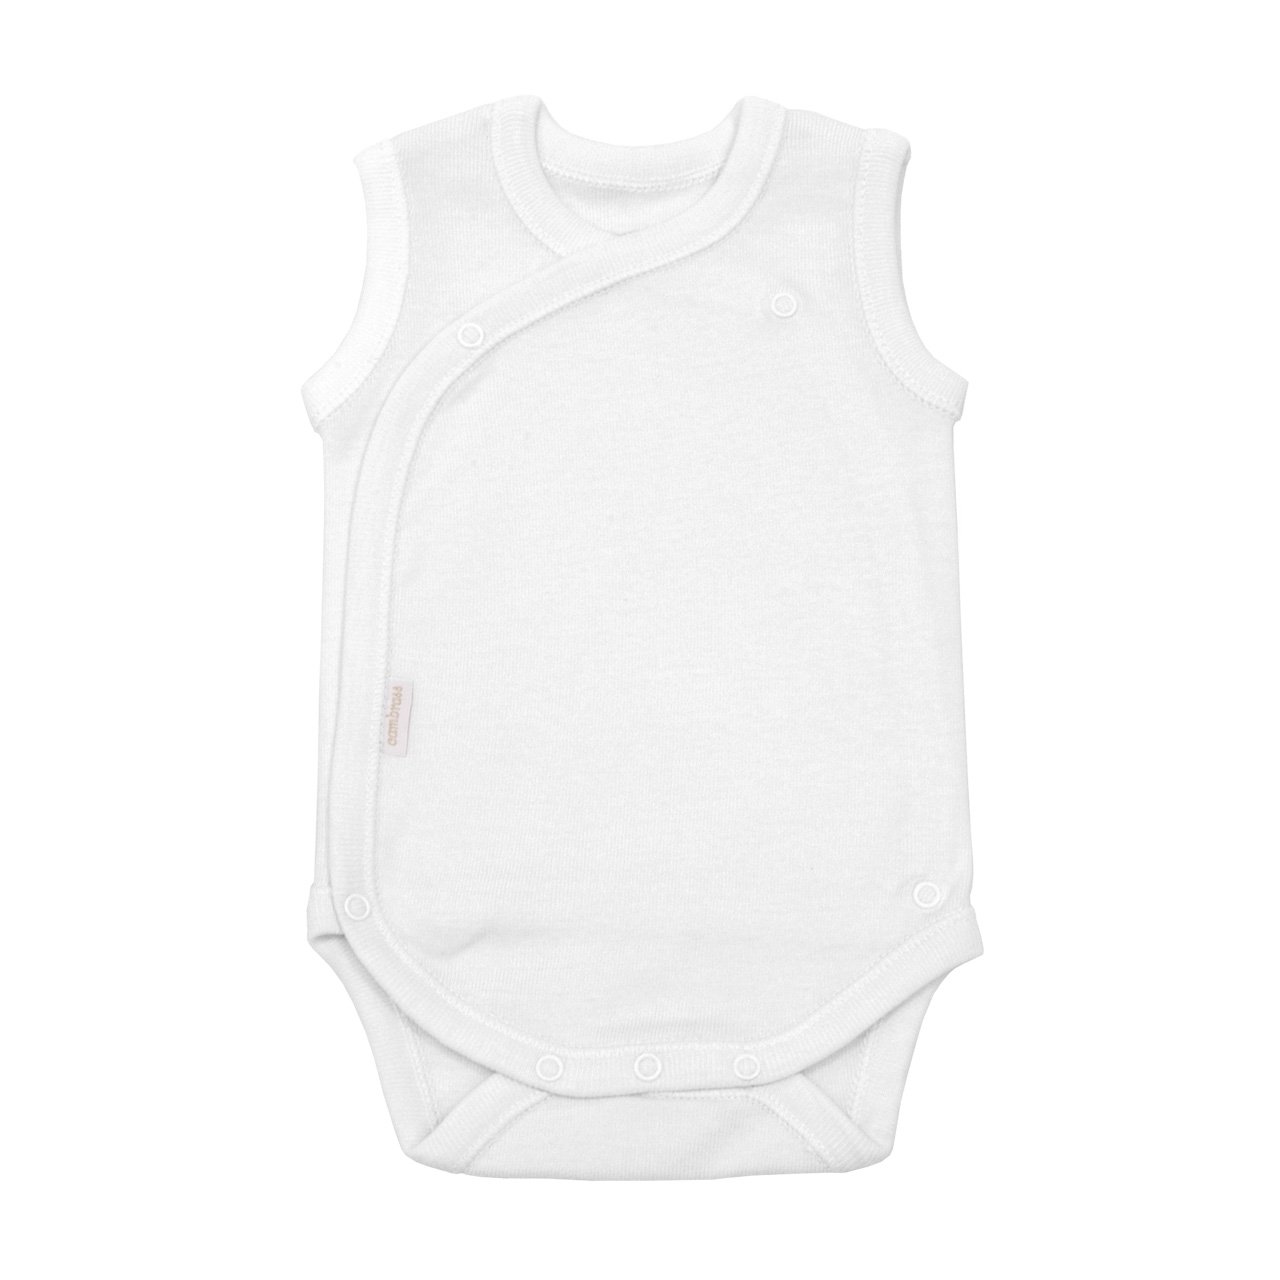 Cambrass Baby Bodysuit for Newborn (White) 52 cm White